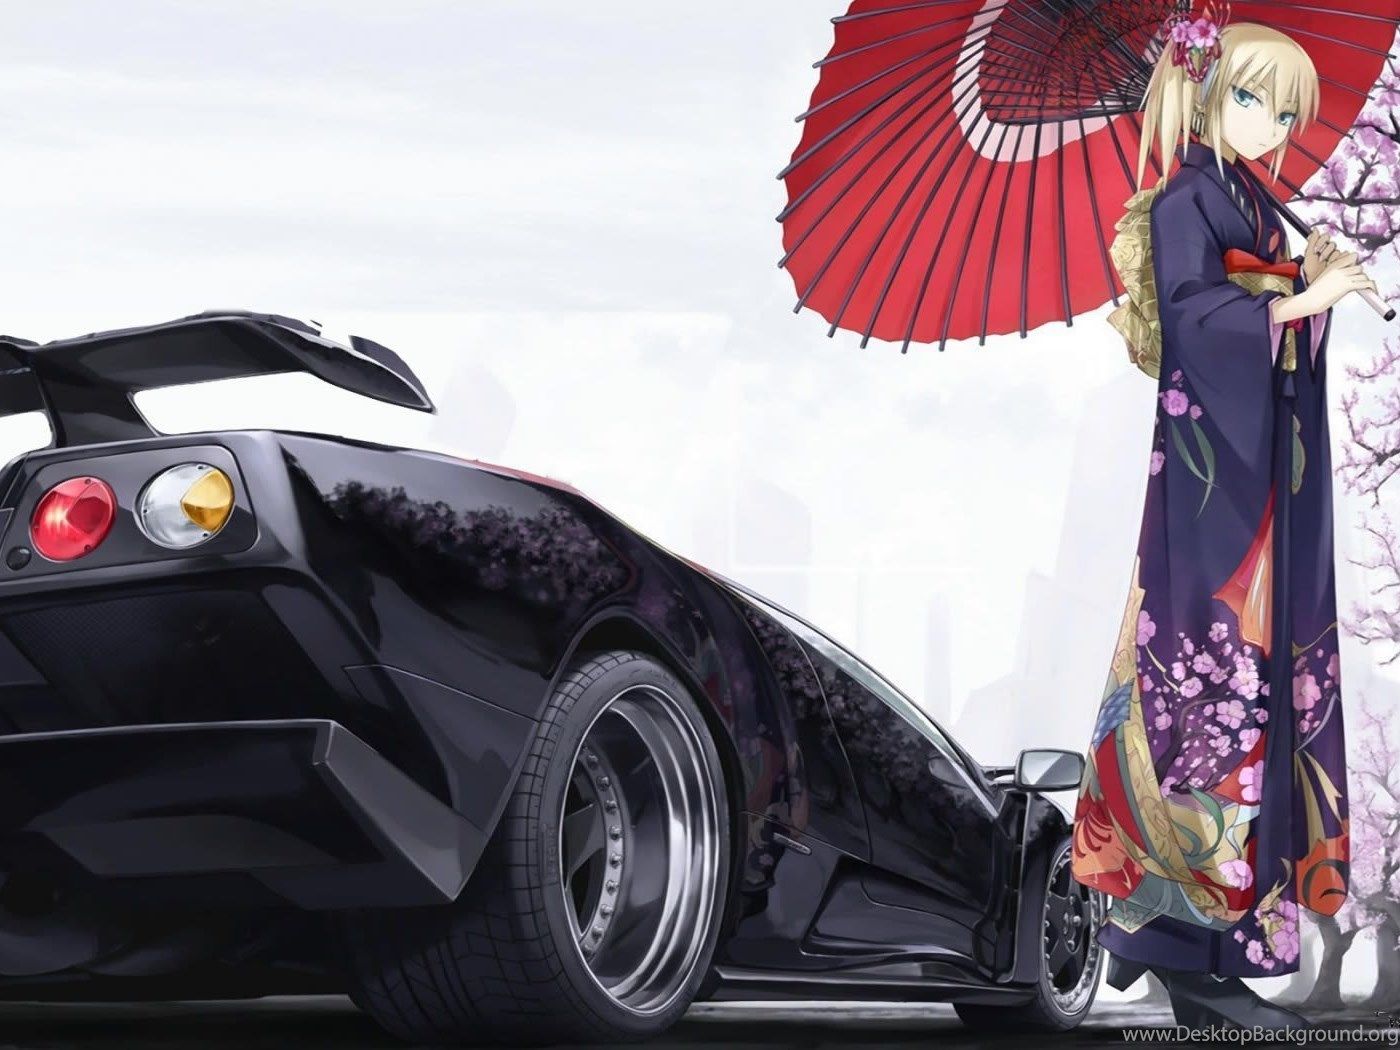 Gallery For Anime Cars Wallpaper Desktop Background